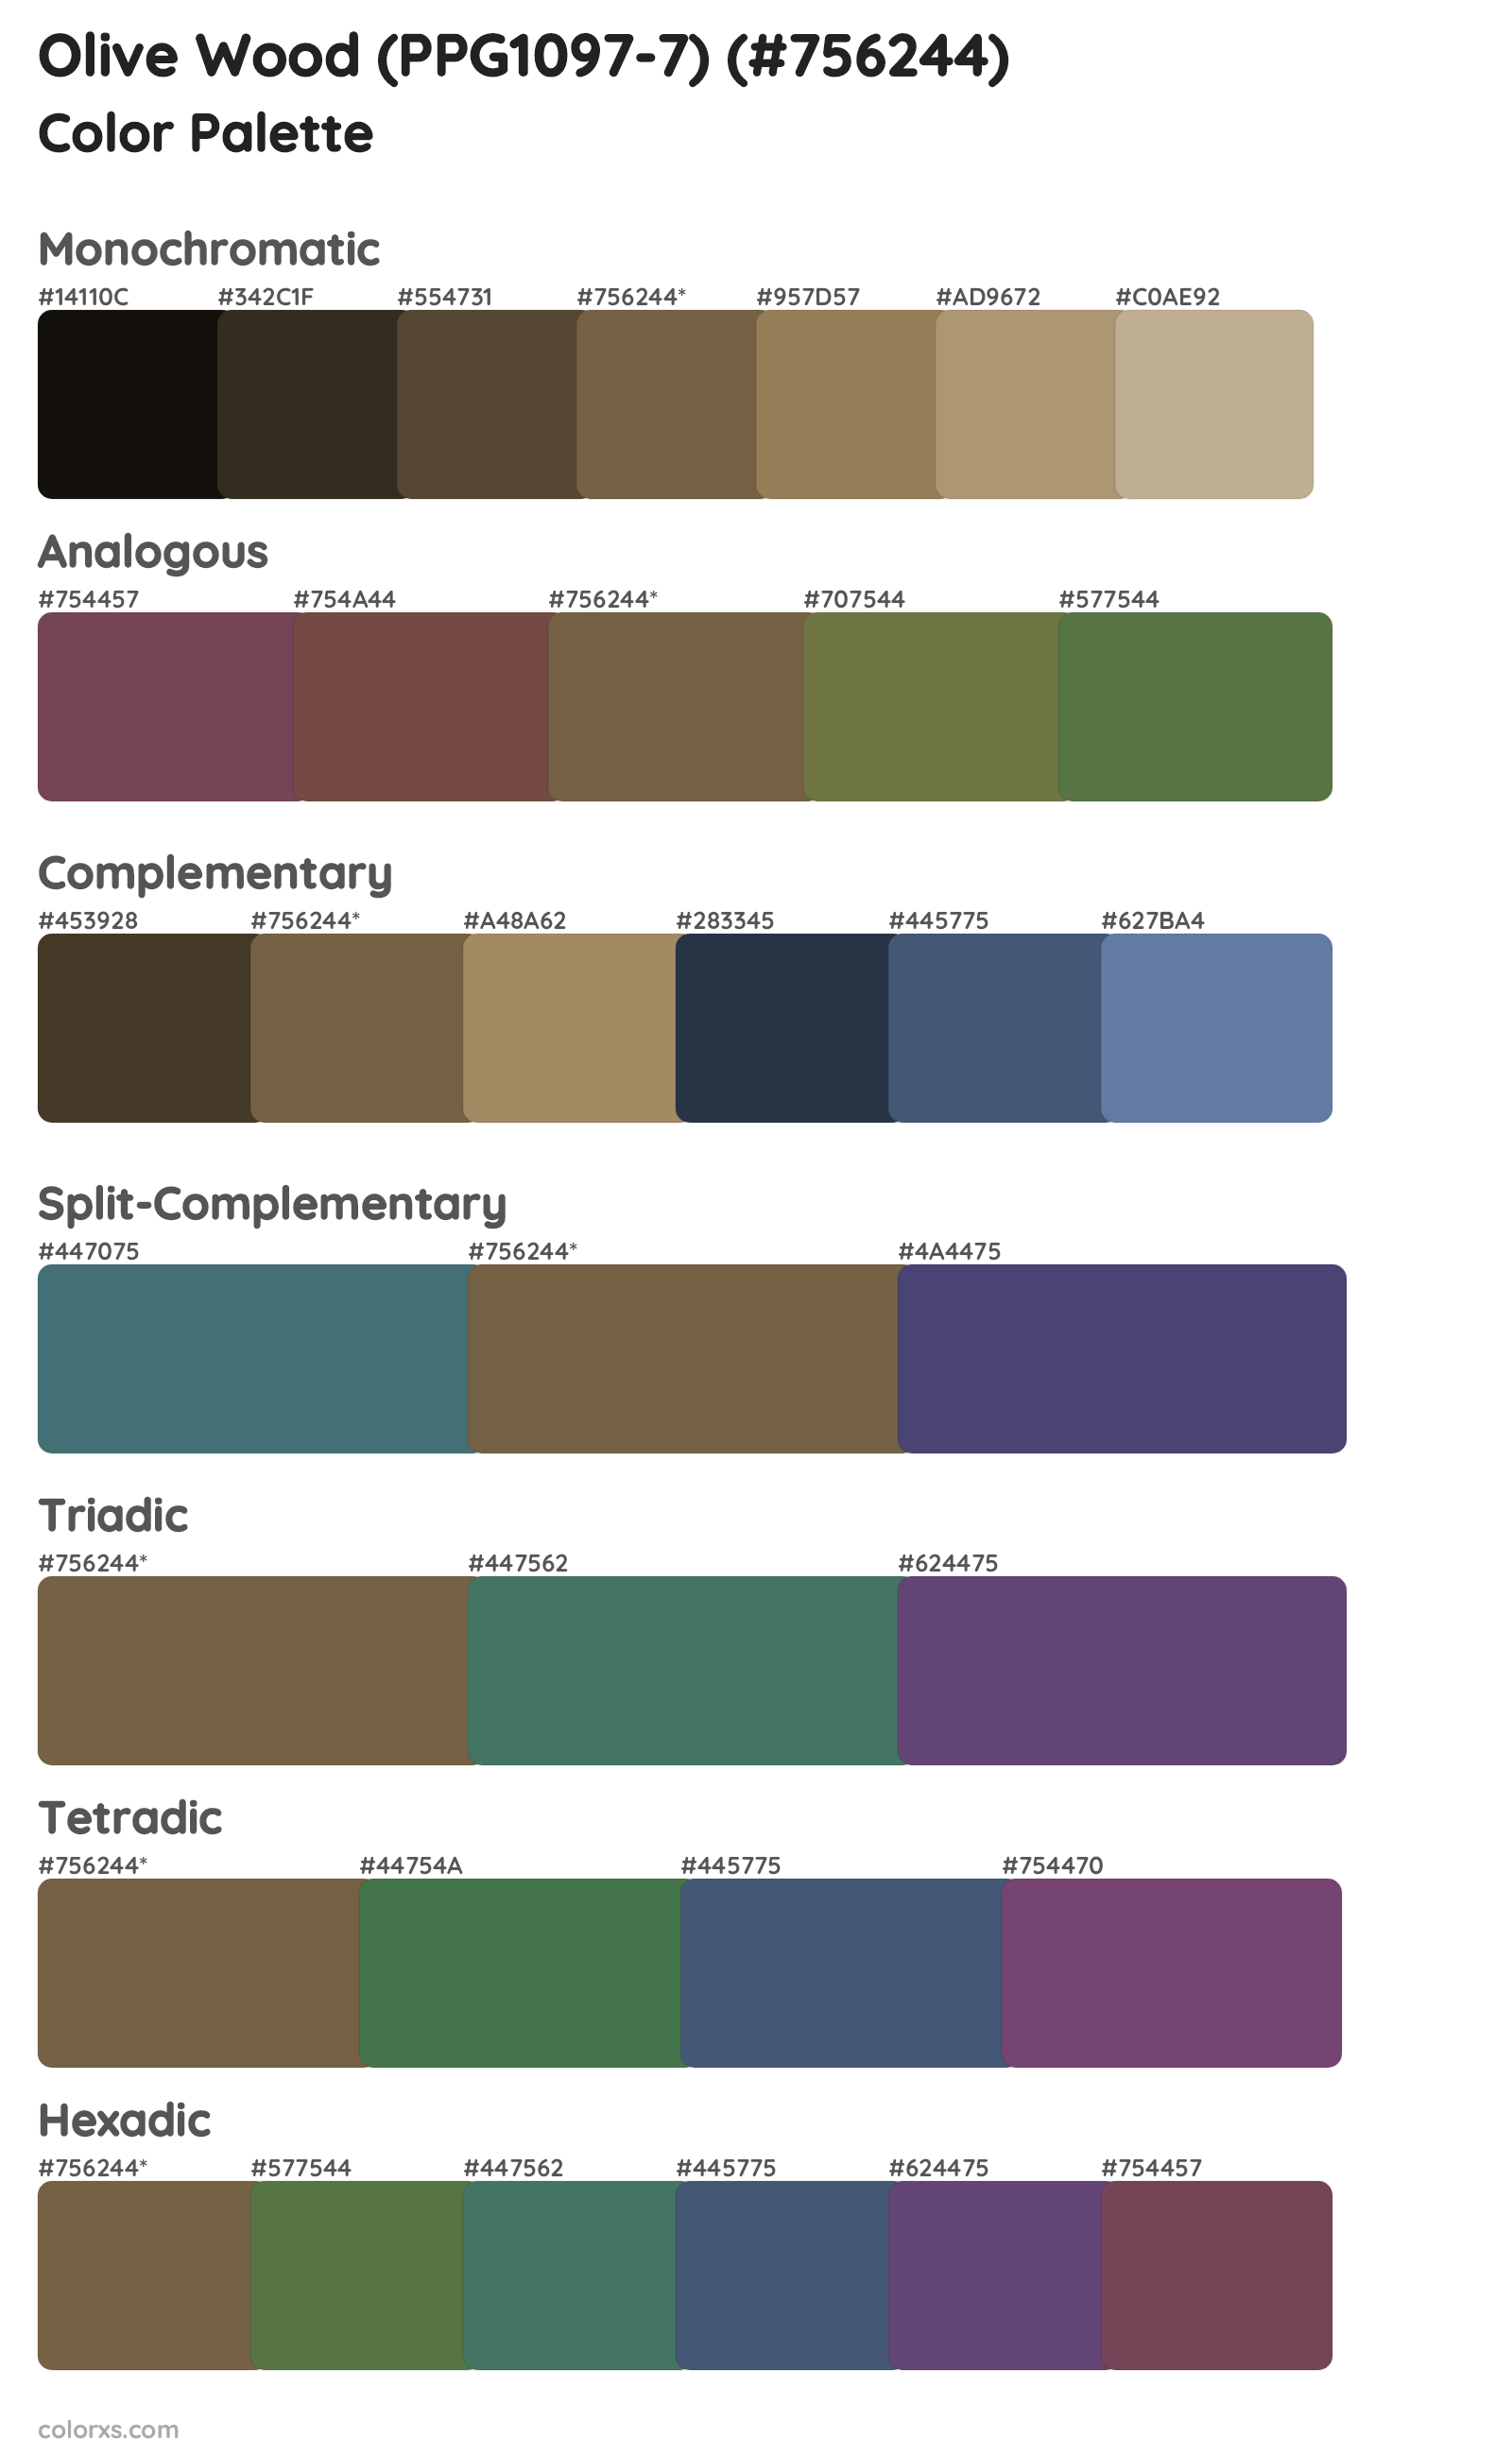 Olive Wood (PPG1097-7) Color Scheme Palettes